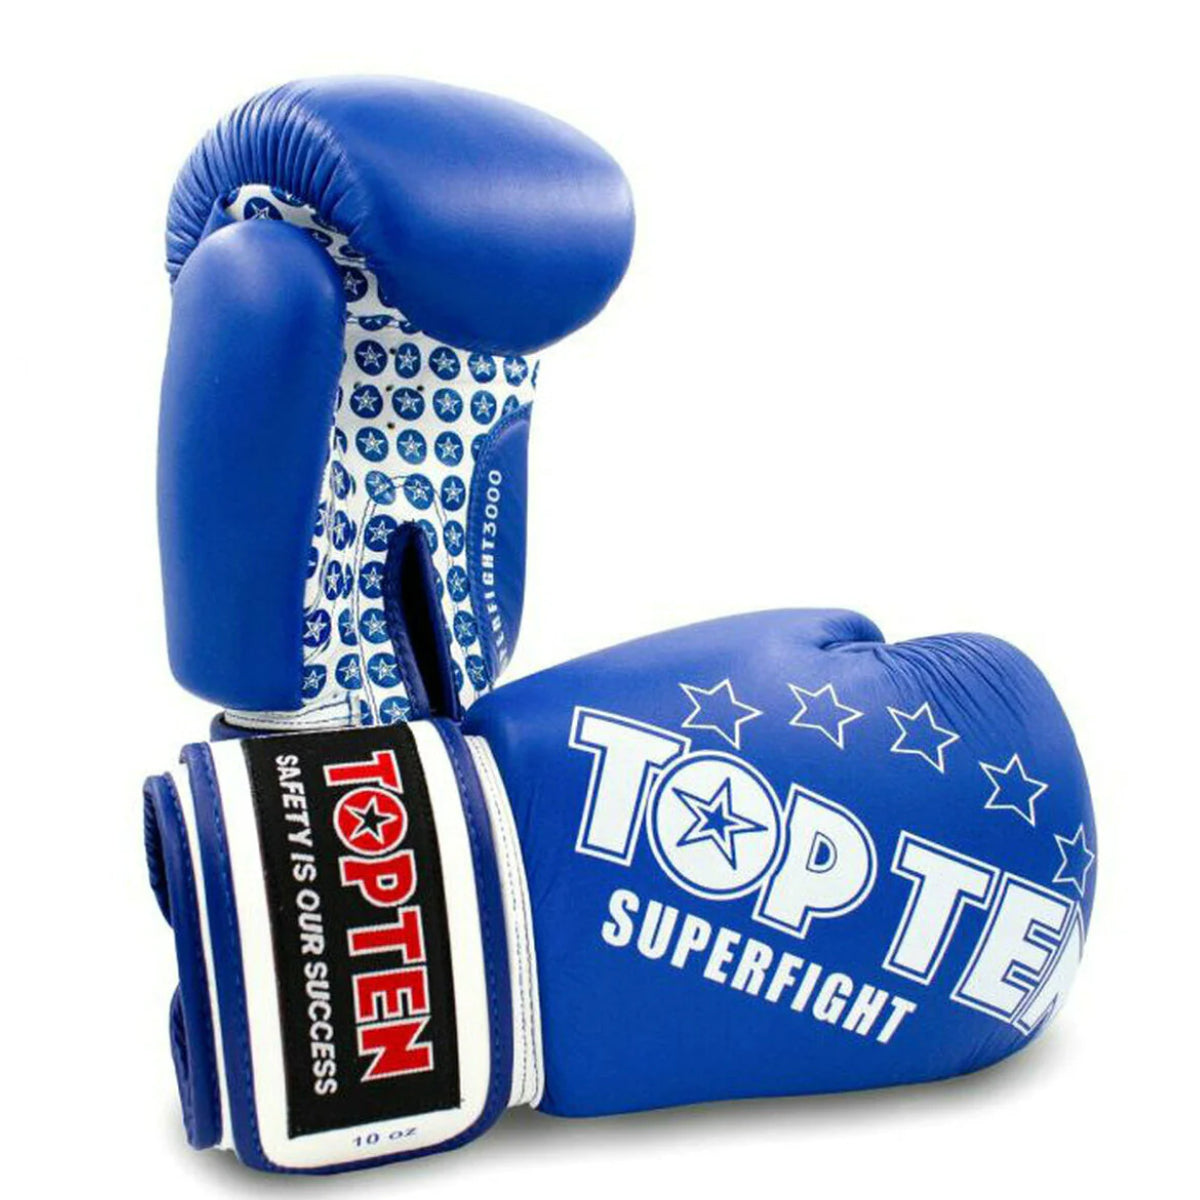 Blue Top Ten Superfight Boxing Gloves